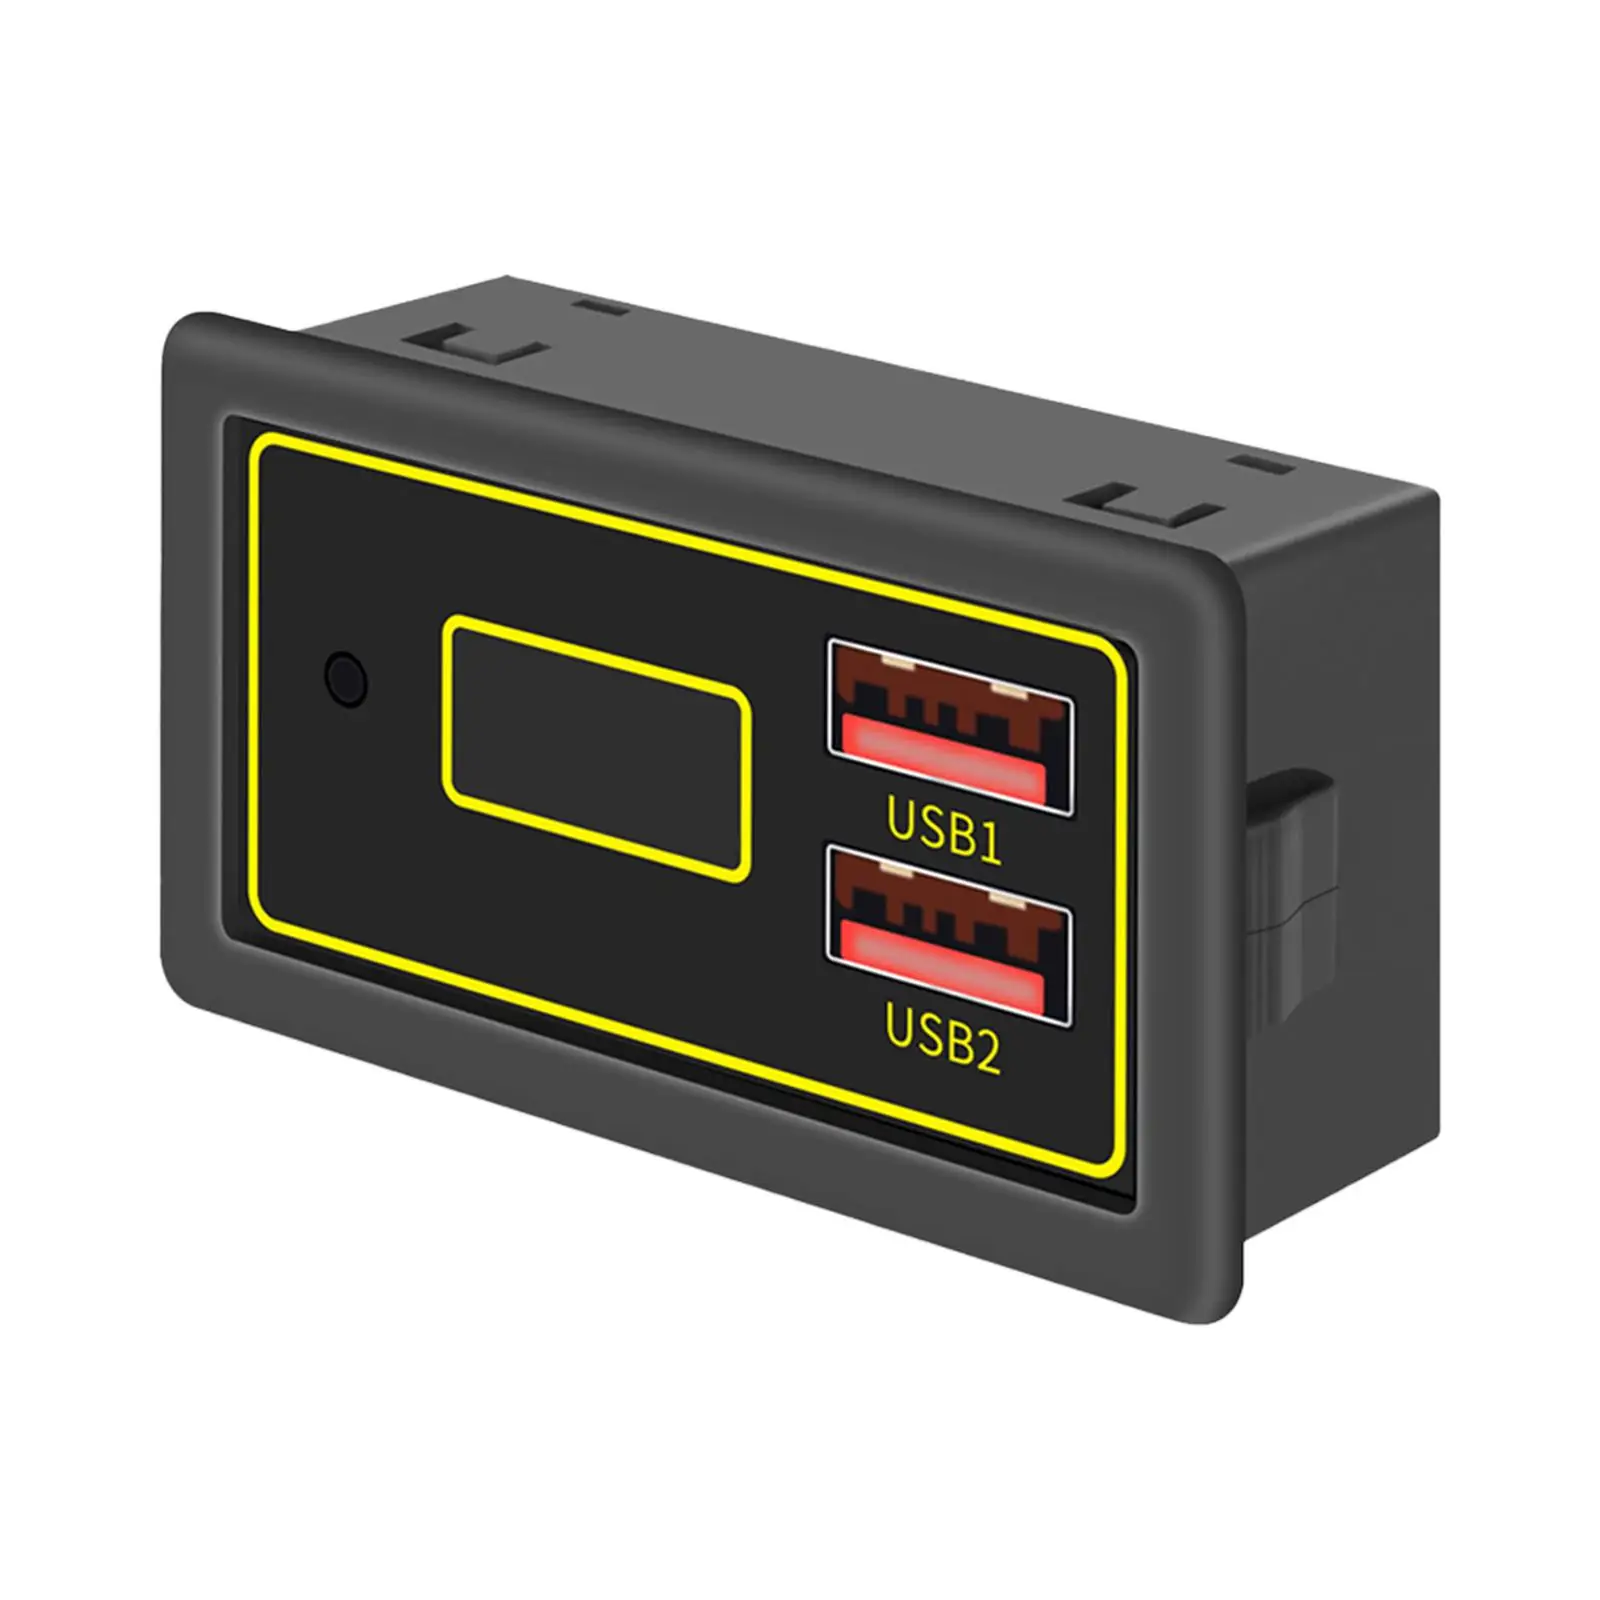 Battery Capacity Voltage Meter, Digital Battery Capacity Tester, 12V 24V Support LCD Display Battery Indicator Voltage Meter